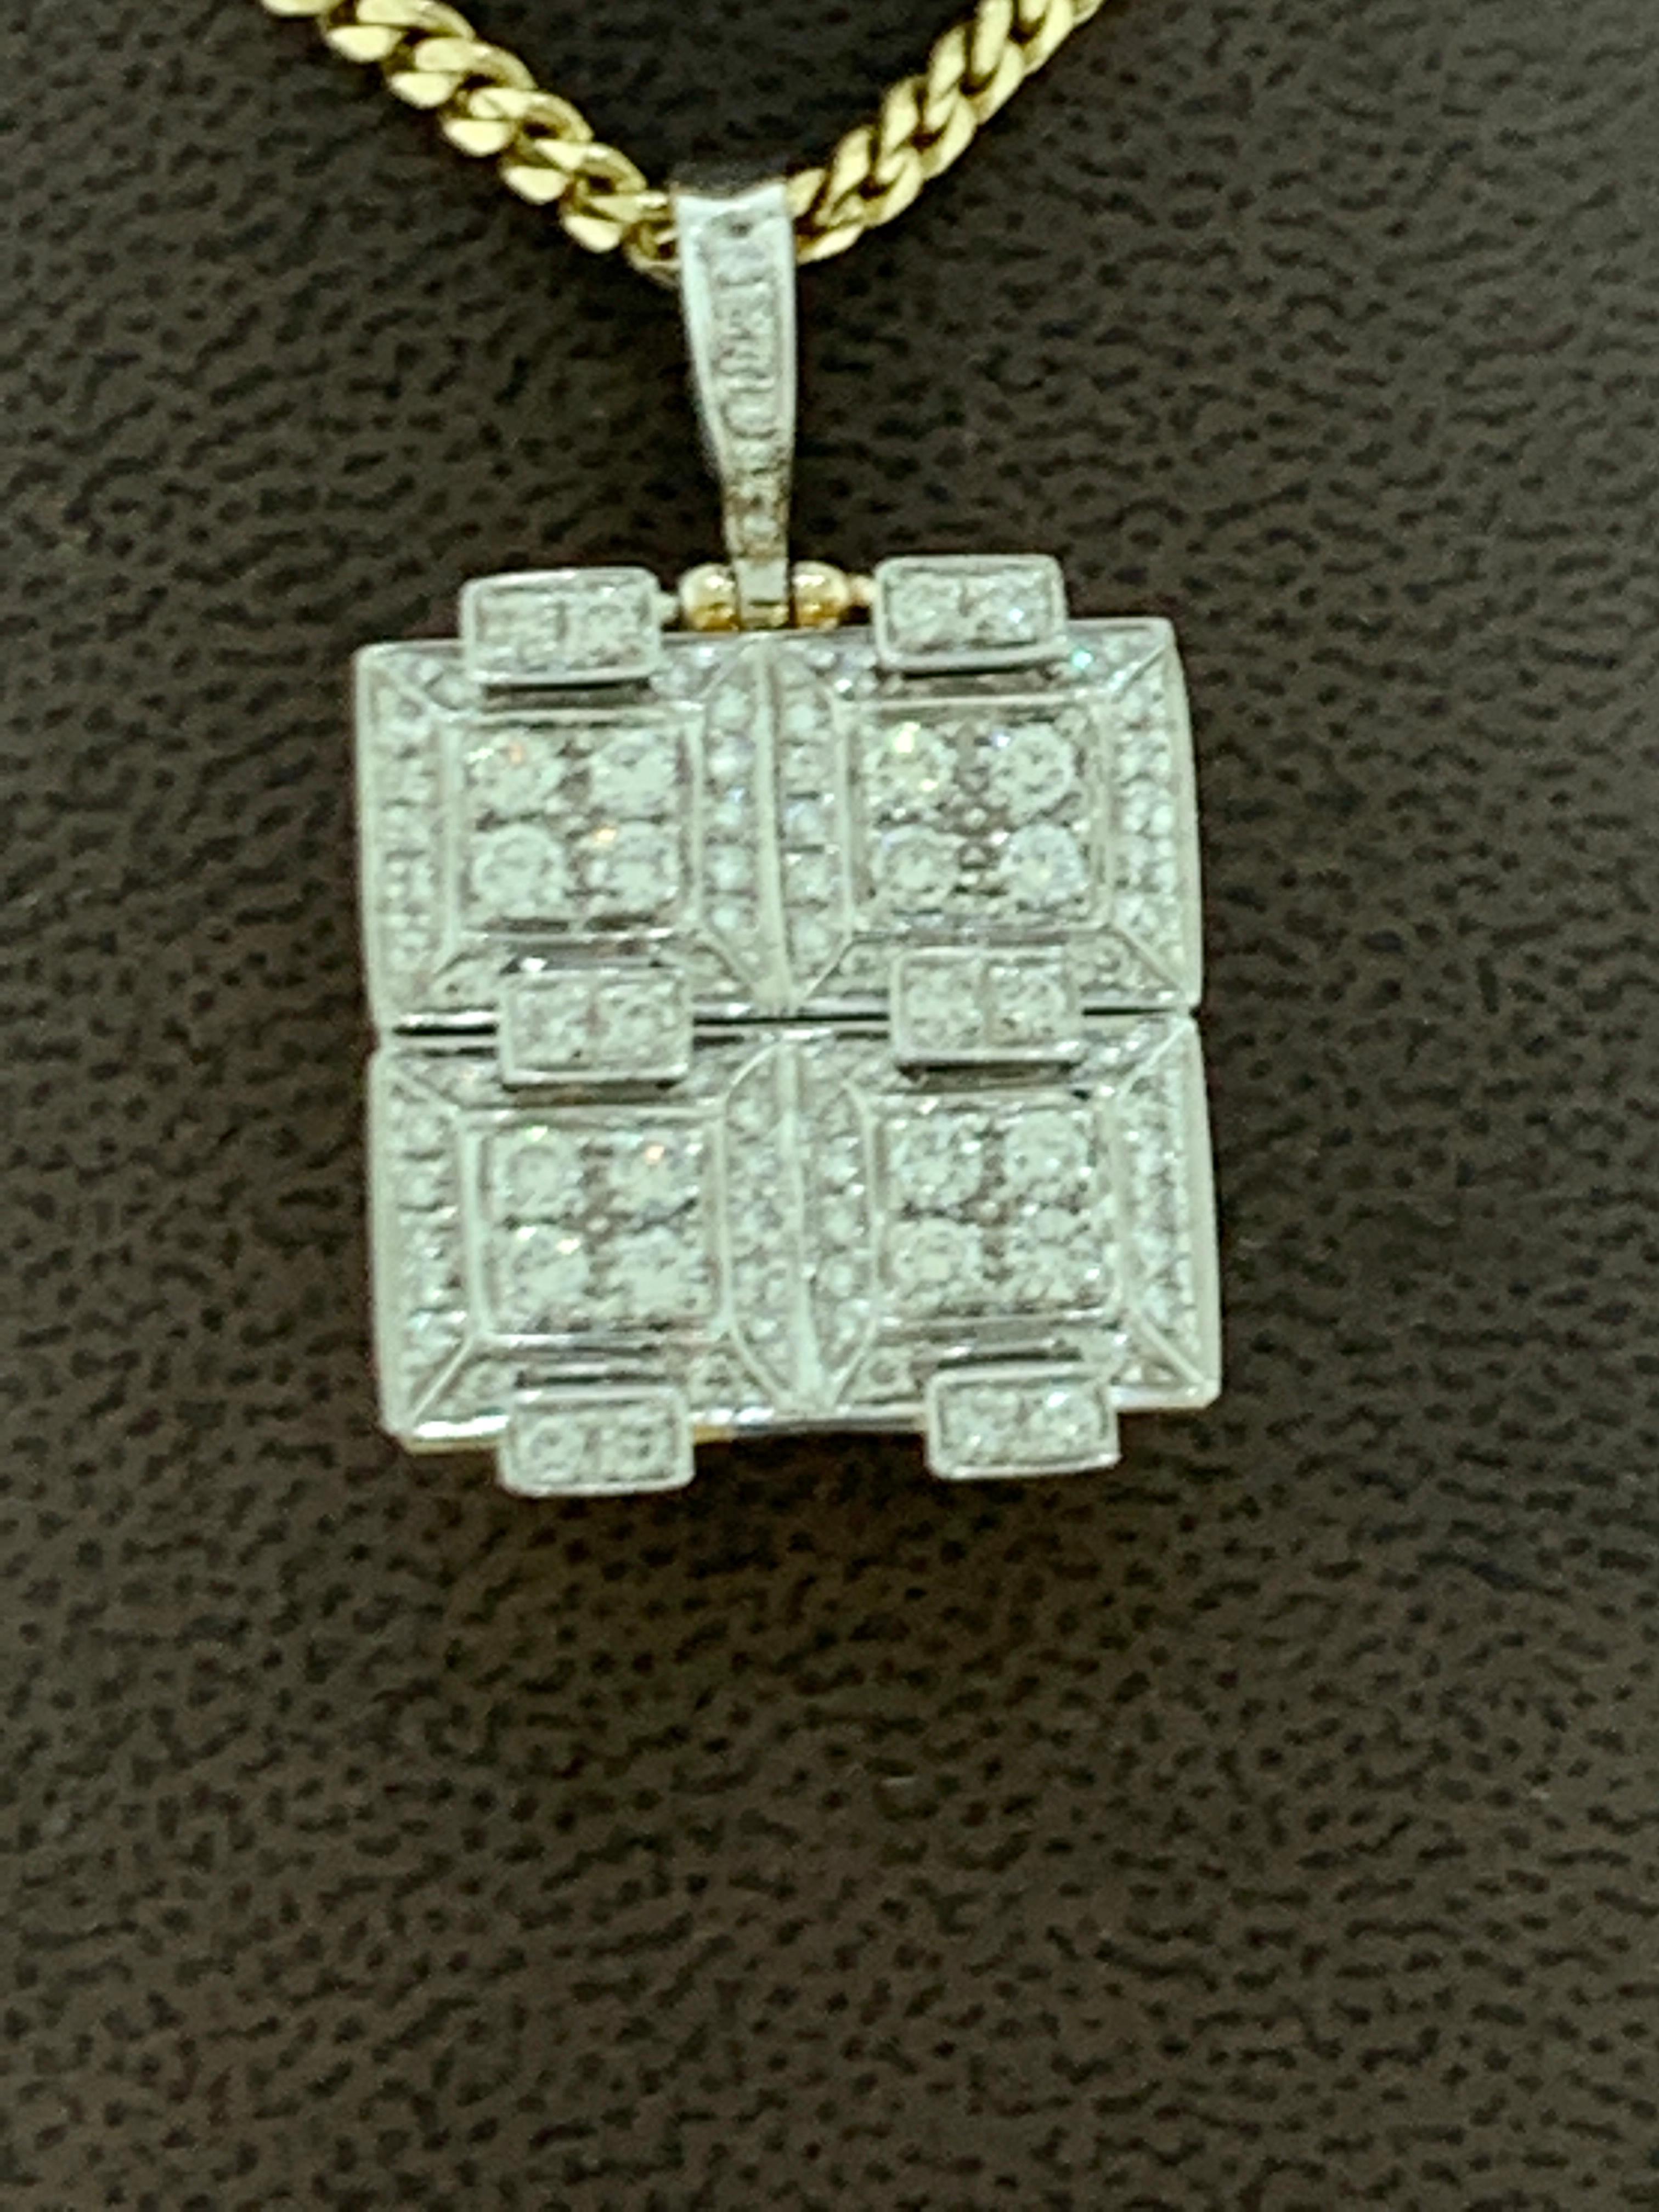 2.5 Carat Diamond Pendant/ Necklace 18 Karat Yellow Gold with Chain 5